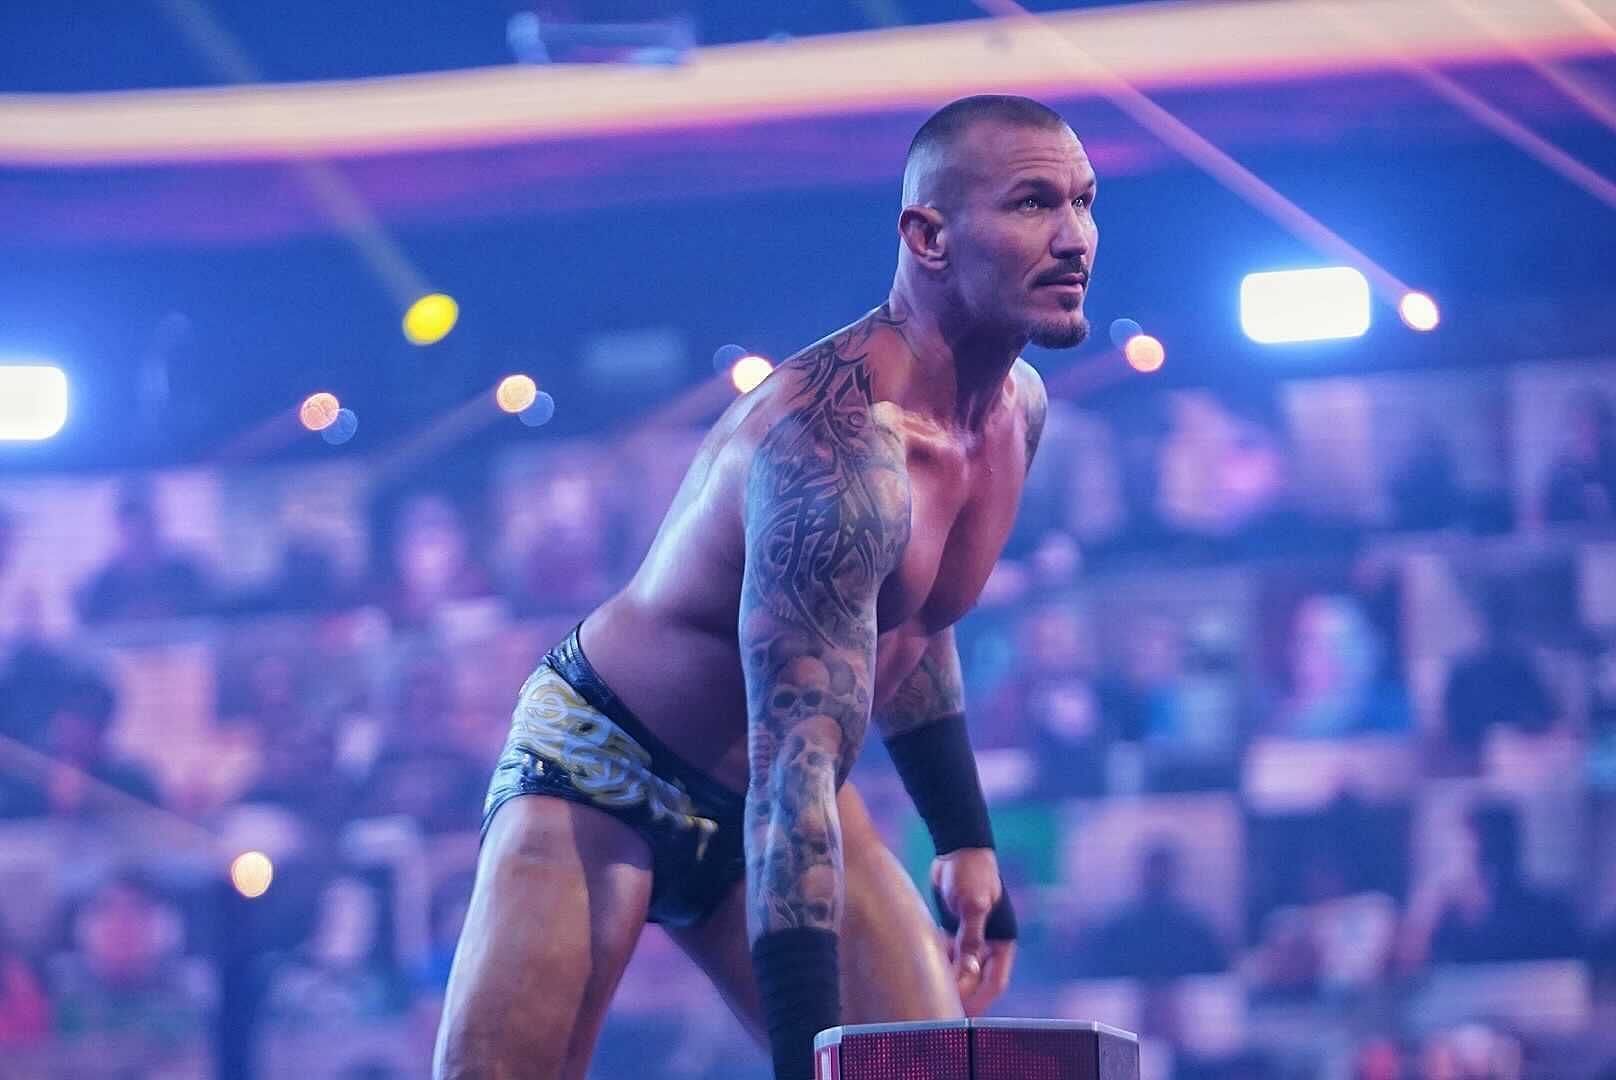 When will Randy Orton make a shocking return to WWE?